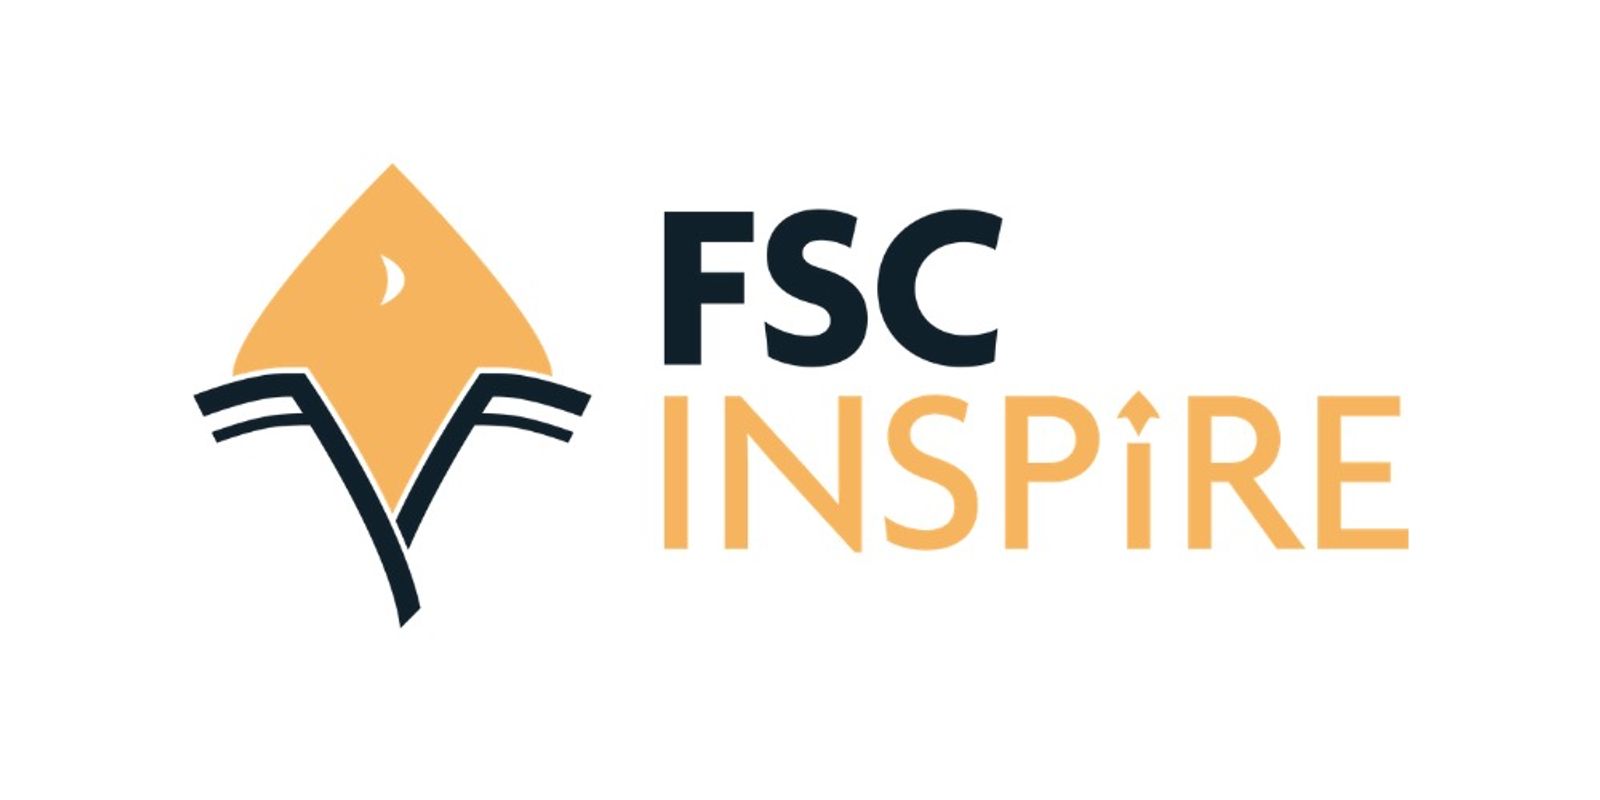 FSC INSPIRE, Chaturbate to Host Parenting Webinar